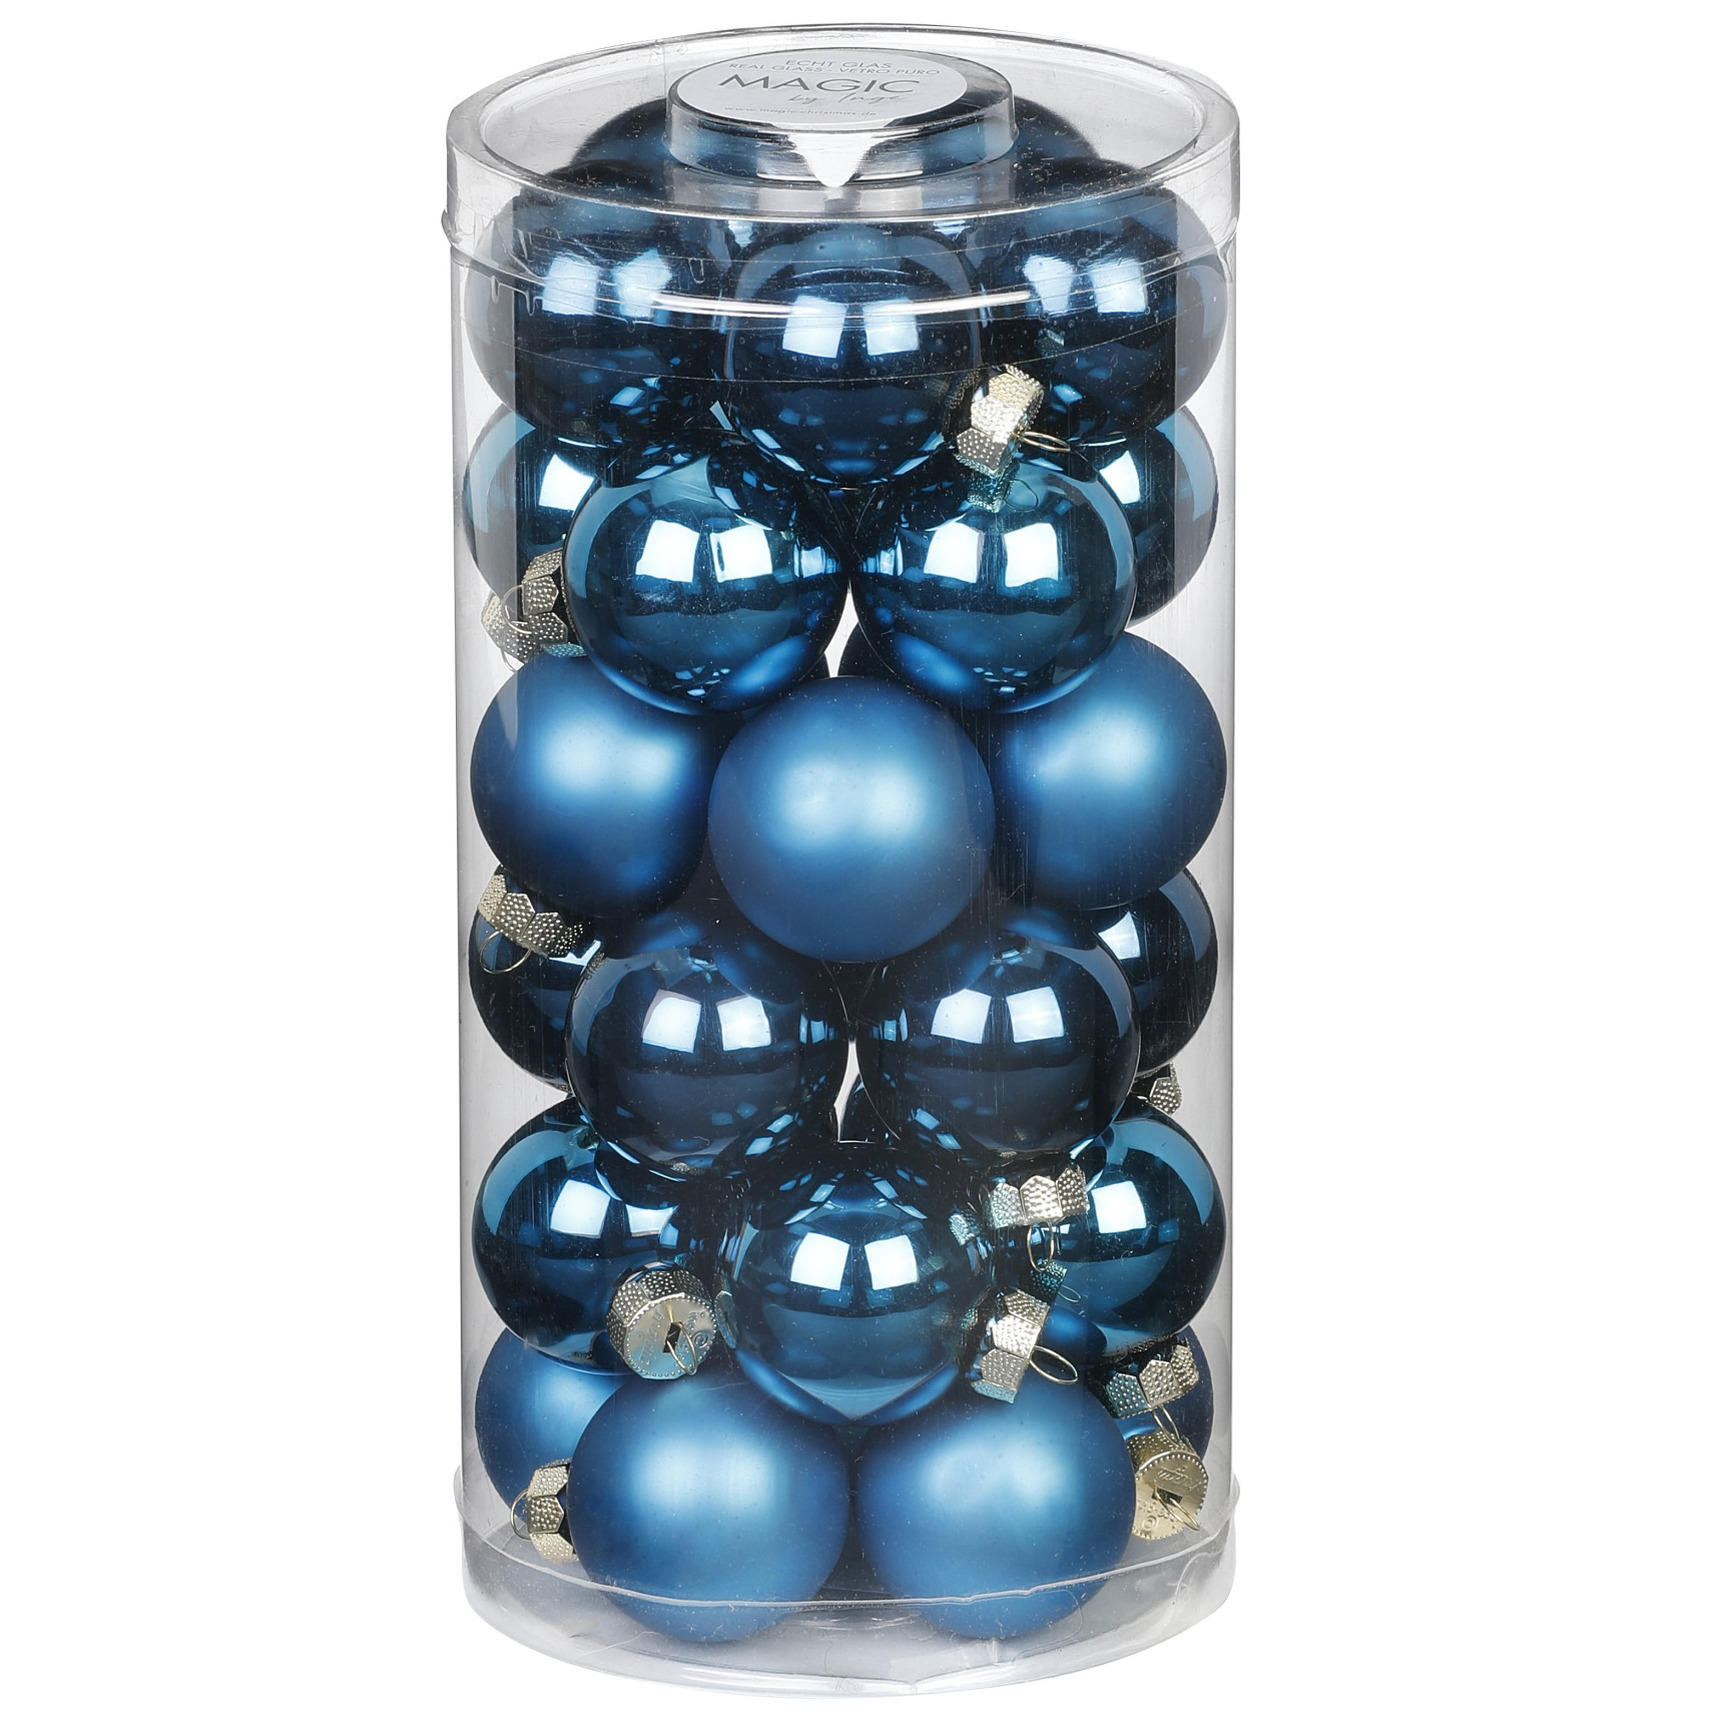 30x stuks kleine glazen kerstballen diep blauw 4 cm